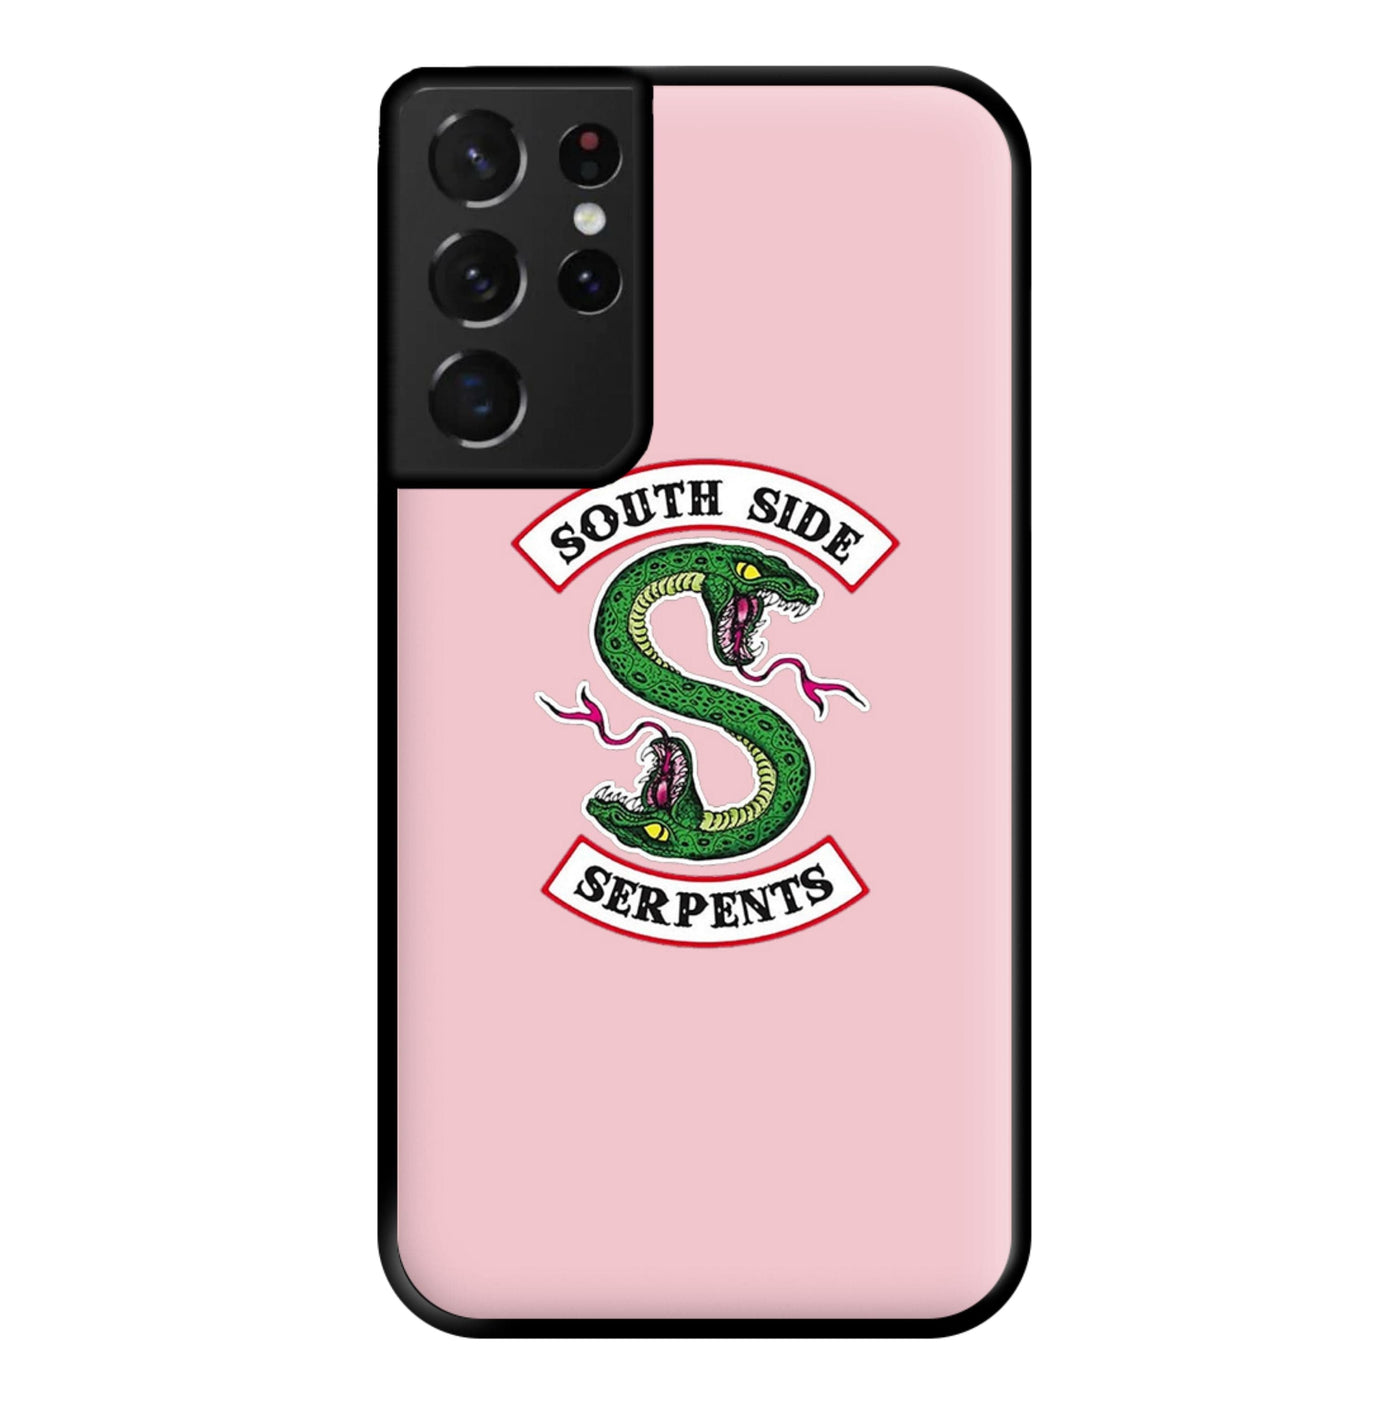 Southside Serpents - Pink Riverdale Phone Case